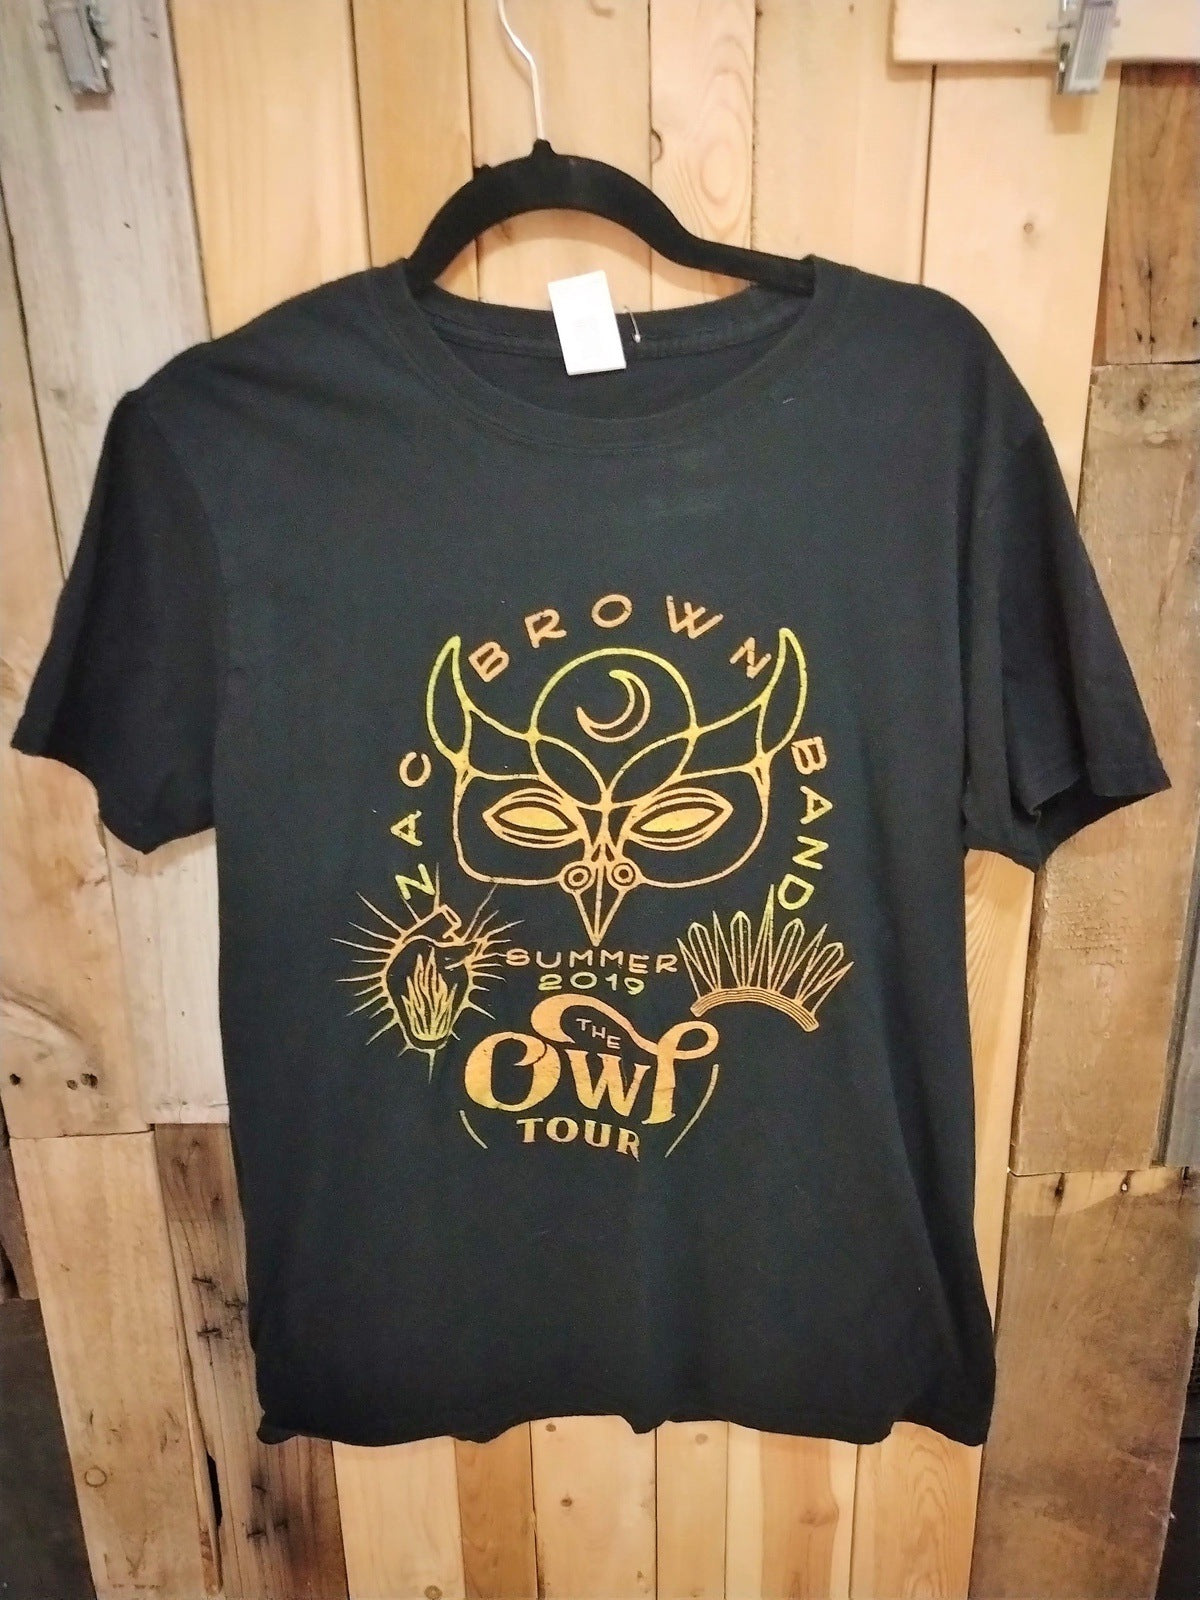 Zac Brown 2019 "The Owl Tour" T Shirt Size Medium 617423WH